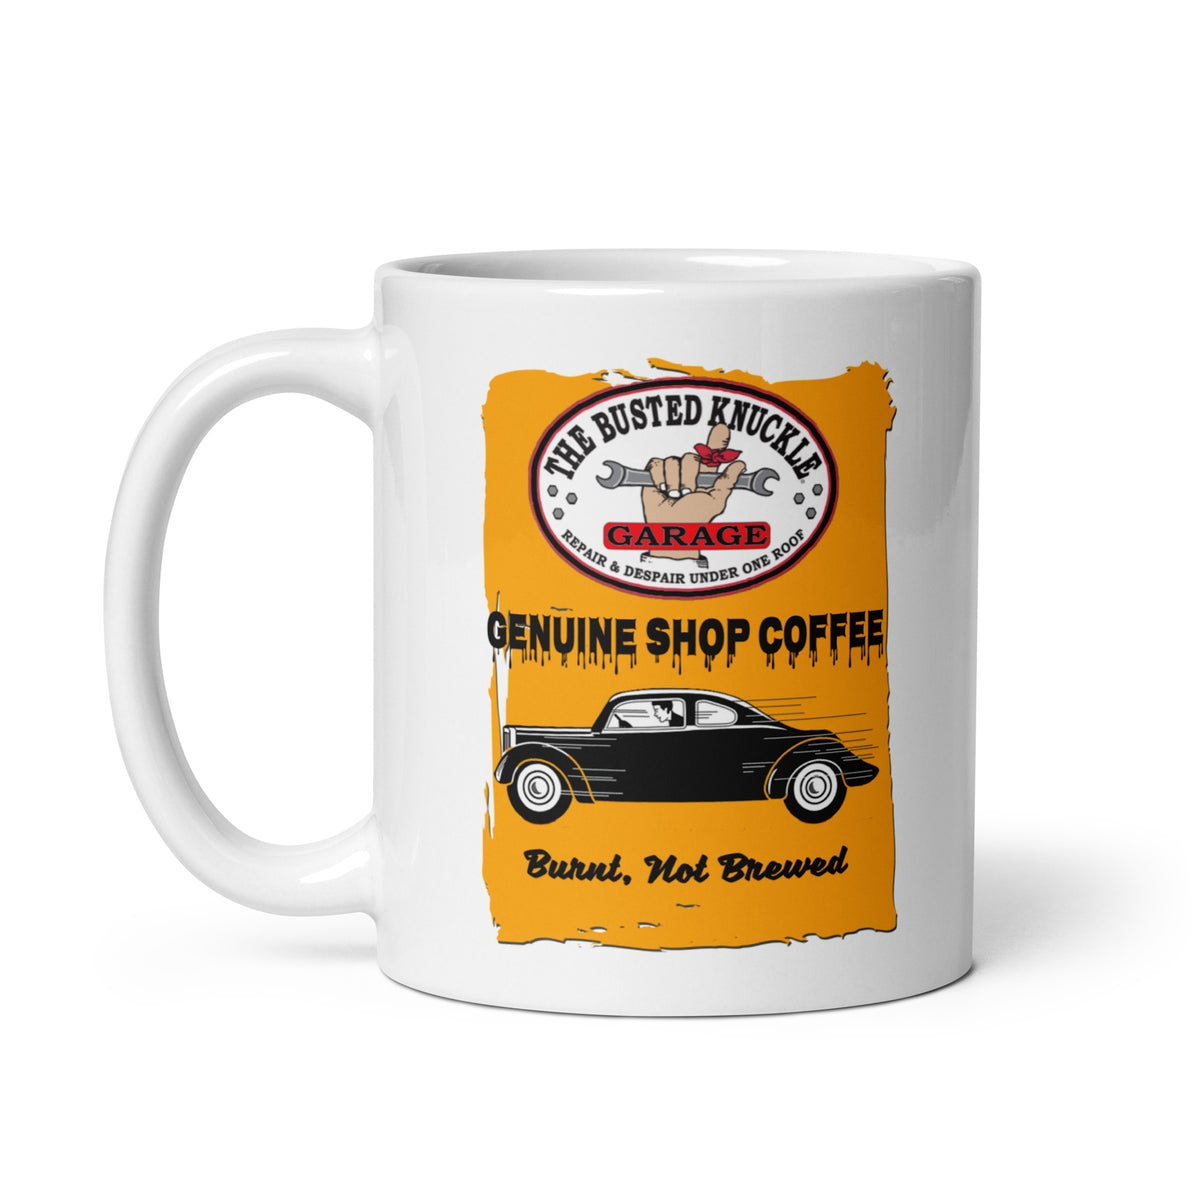 Busted Knuckle Garage Shop Coffee Mug